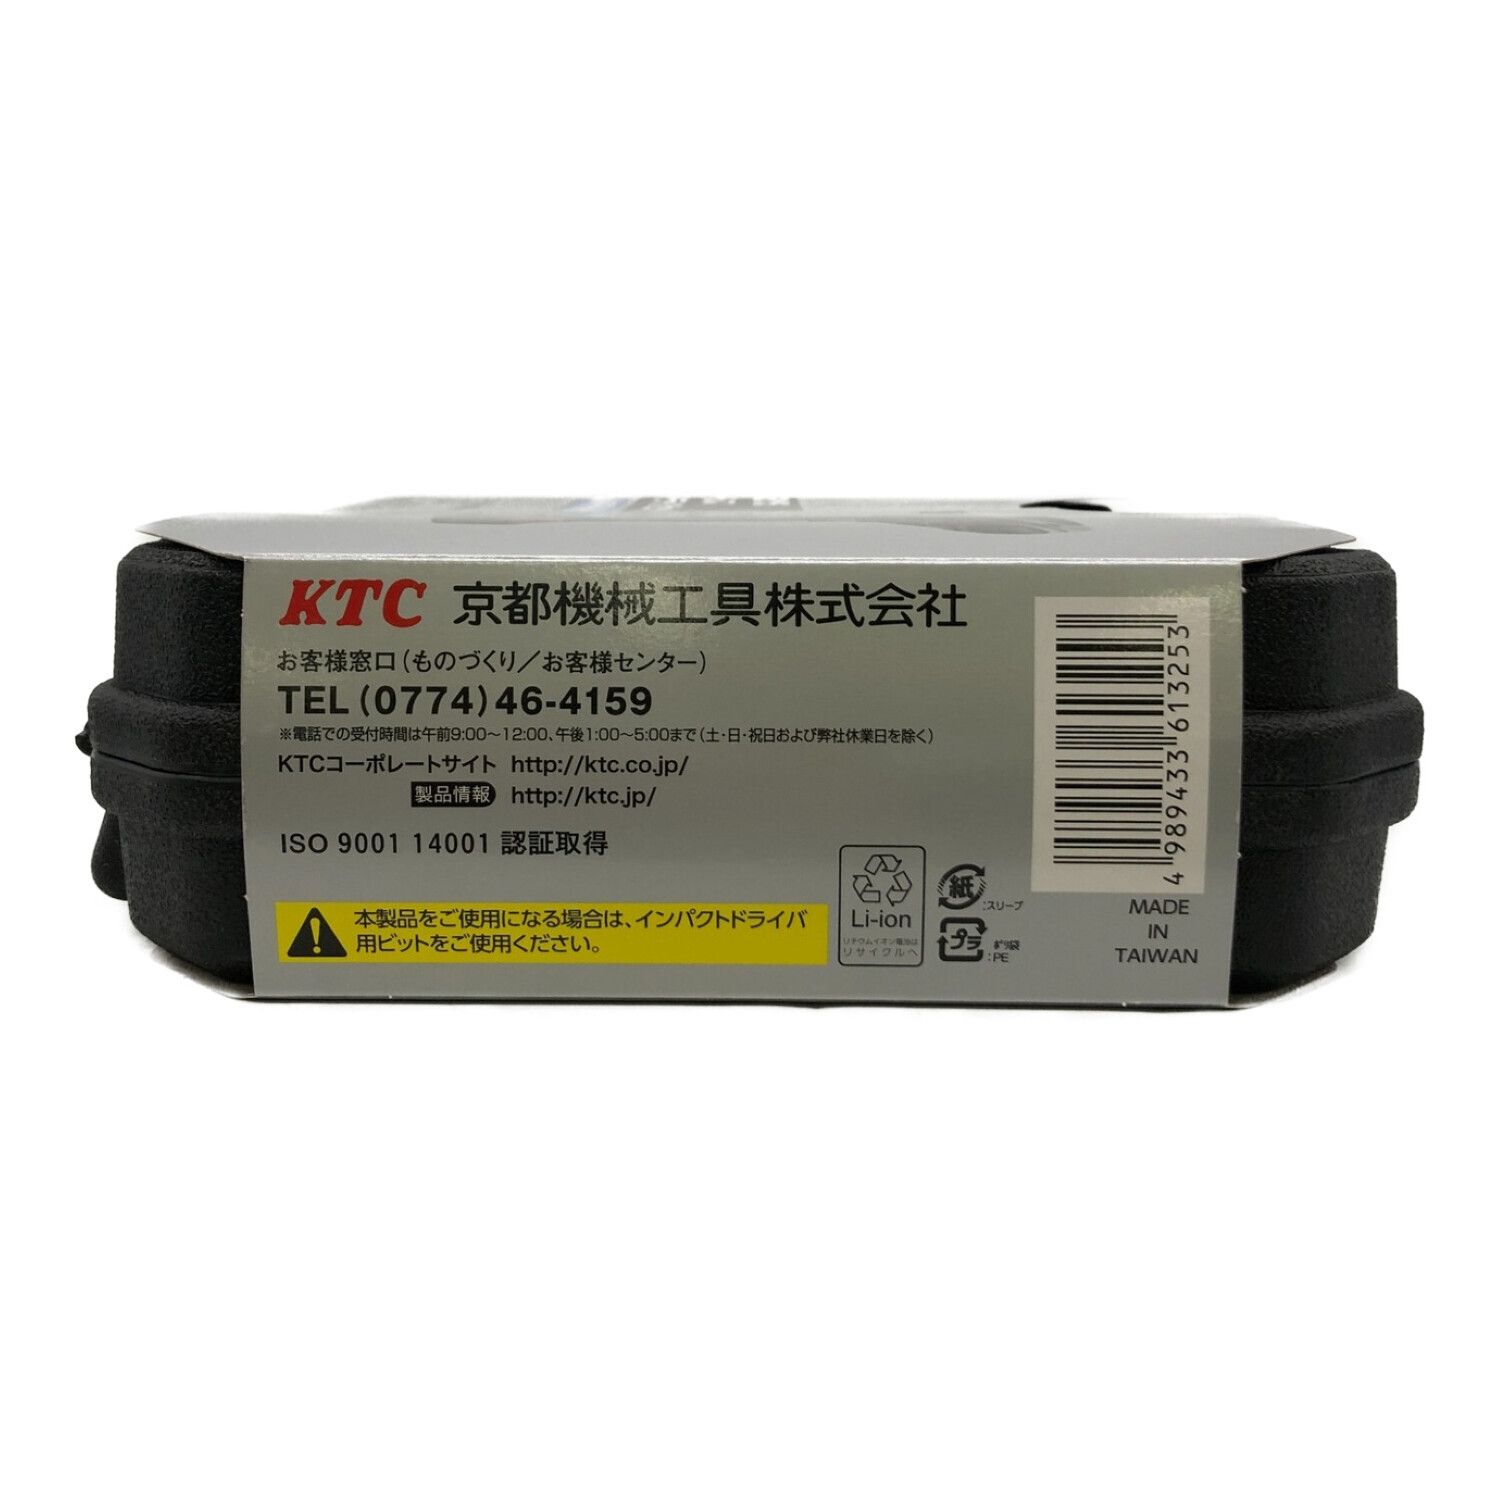 KTC (京都機械工具) 1/4 インパクトドライバセット JAE101 動作確認